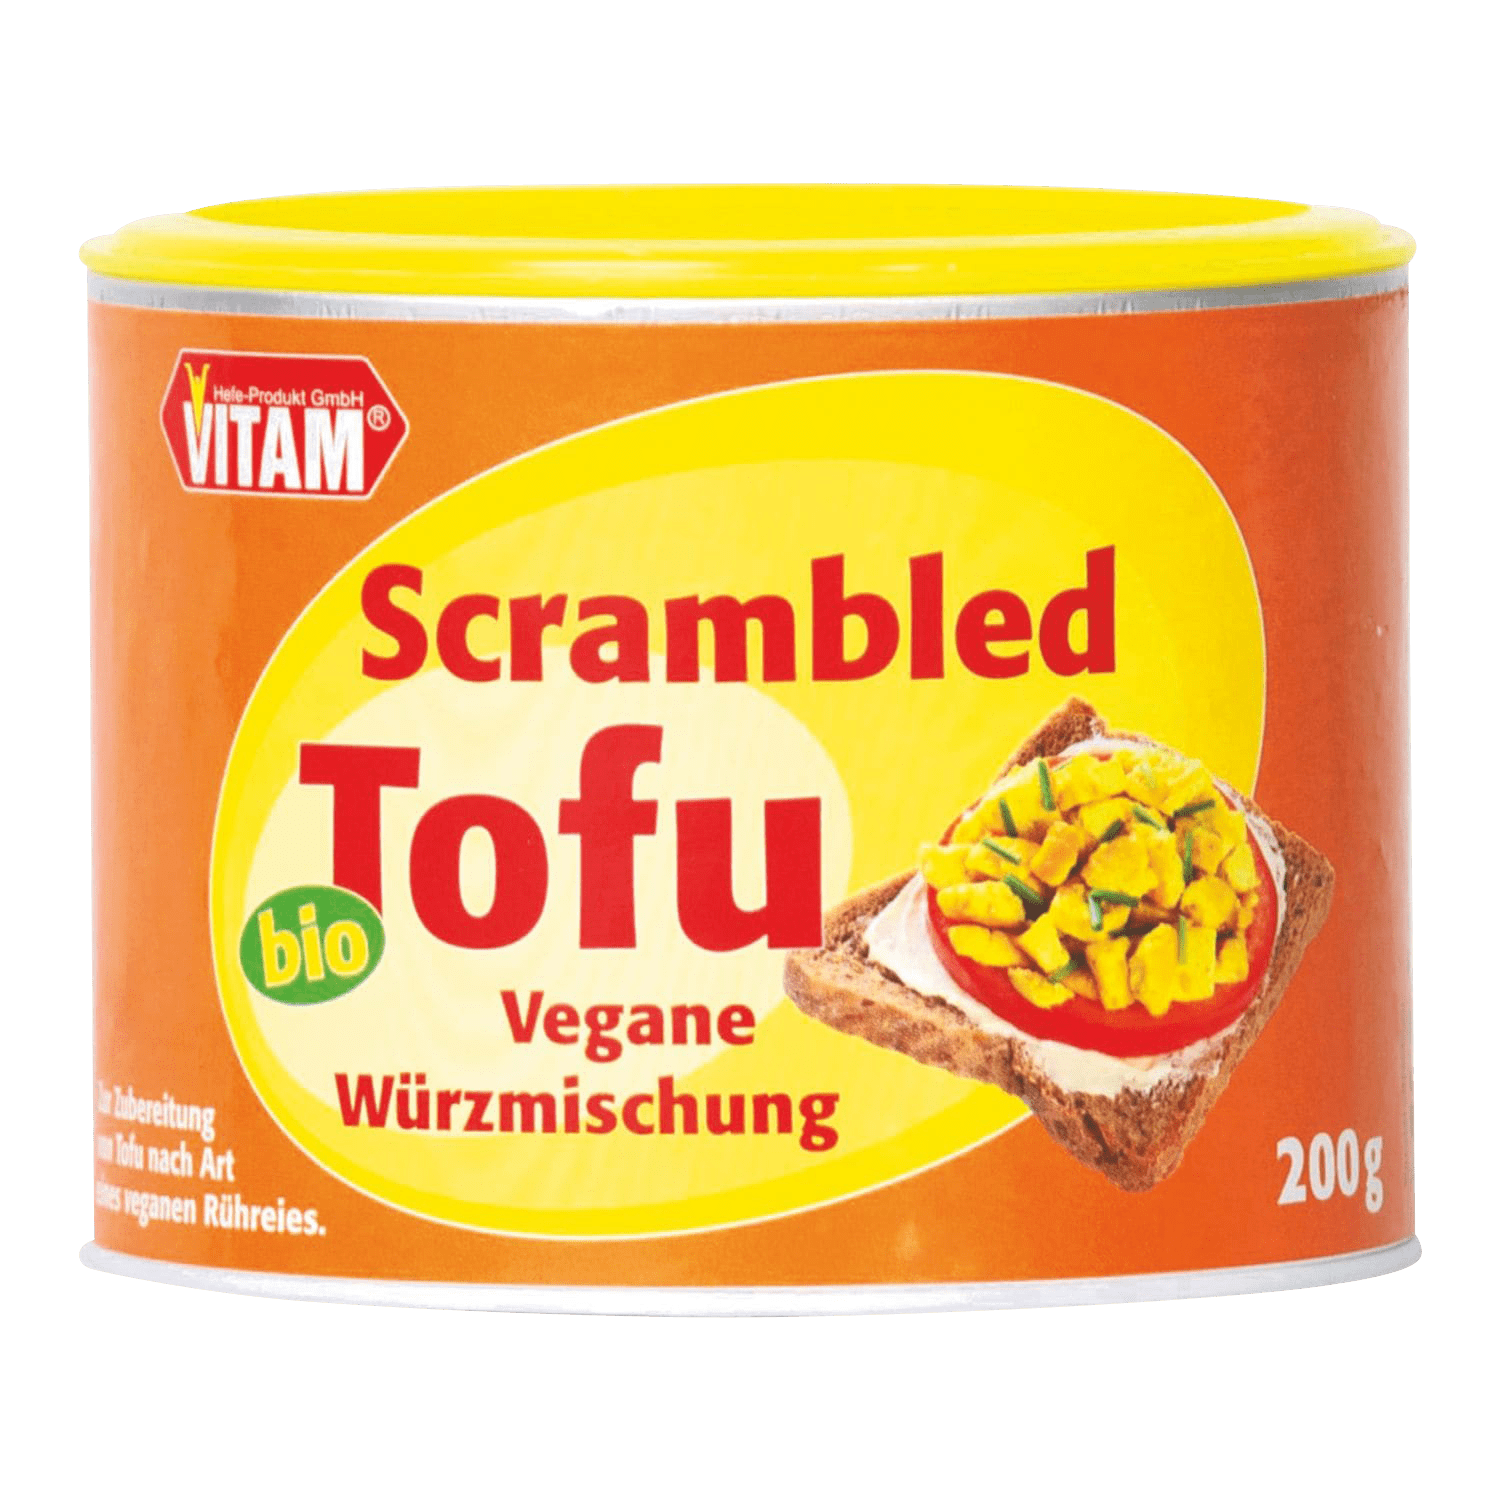 Scrambled Tofu Vegan Seasoning Mix, Organic, 200g